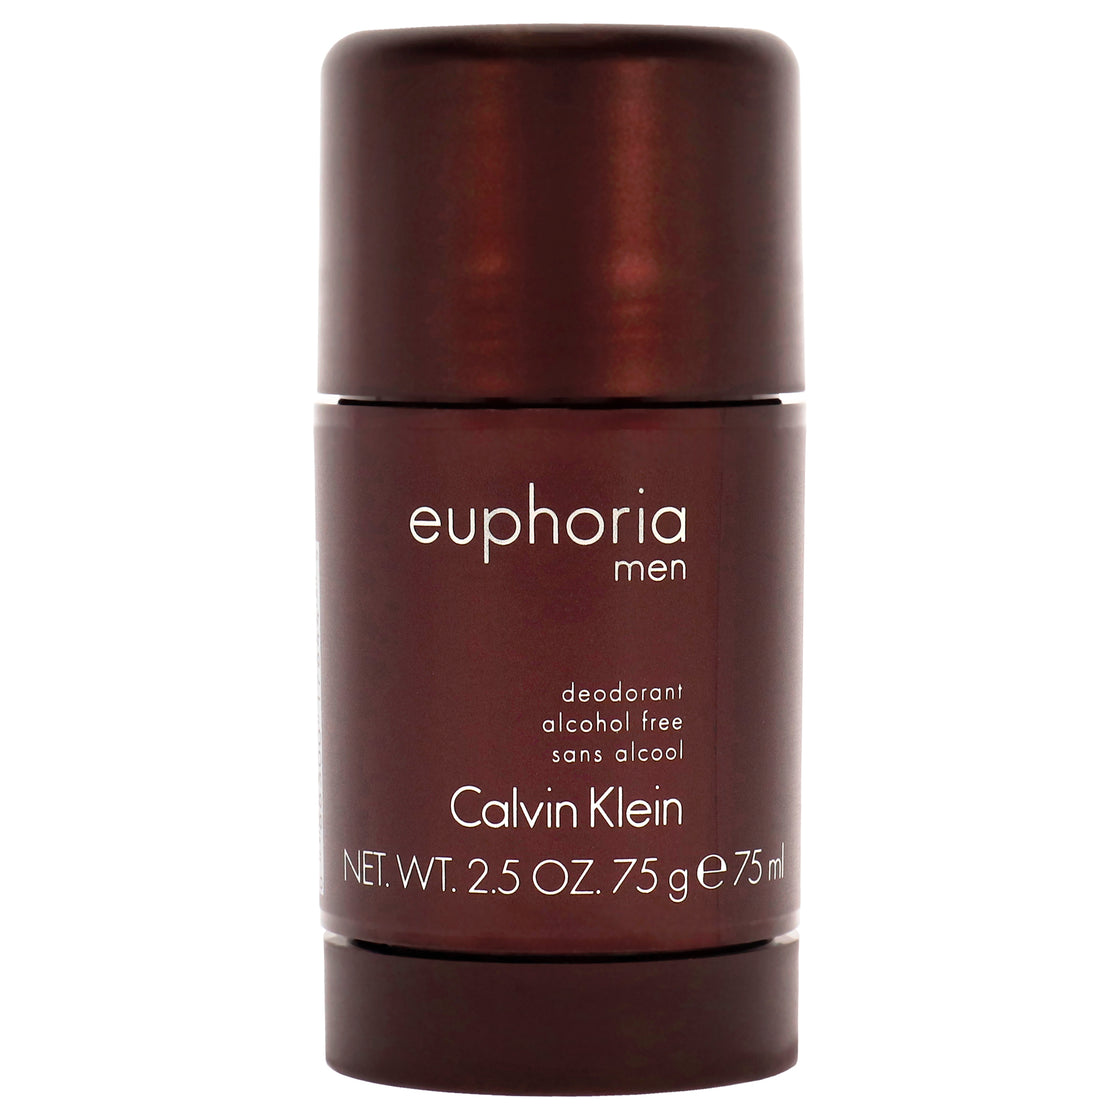 Euphoria by Calvin Klein for Men - 2.5 oz Deodorant Stick